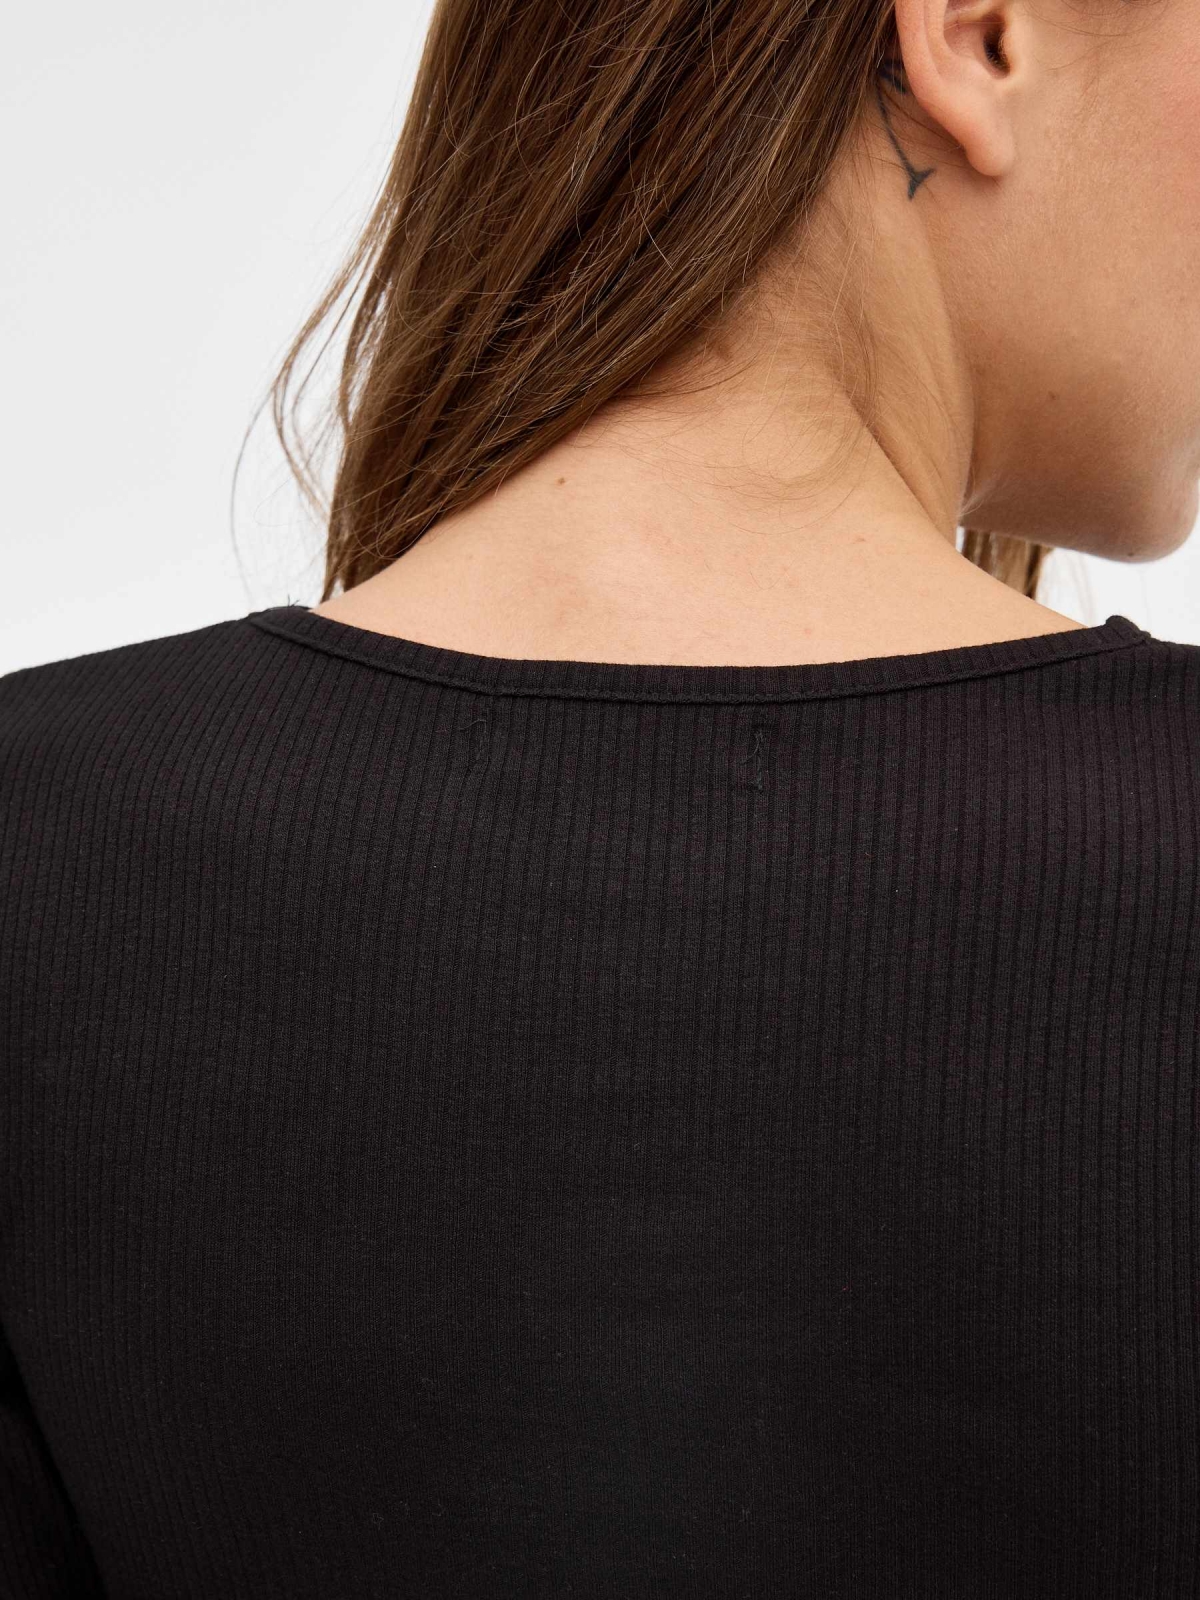 Camiseta rib escote cut out negro vista detalle